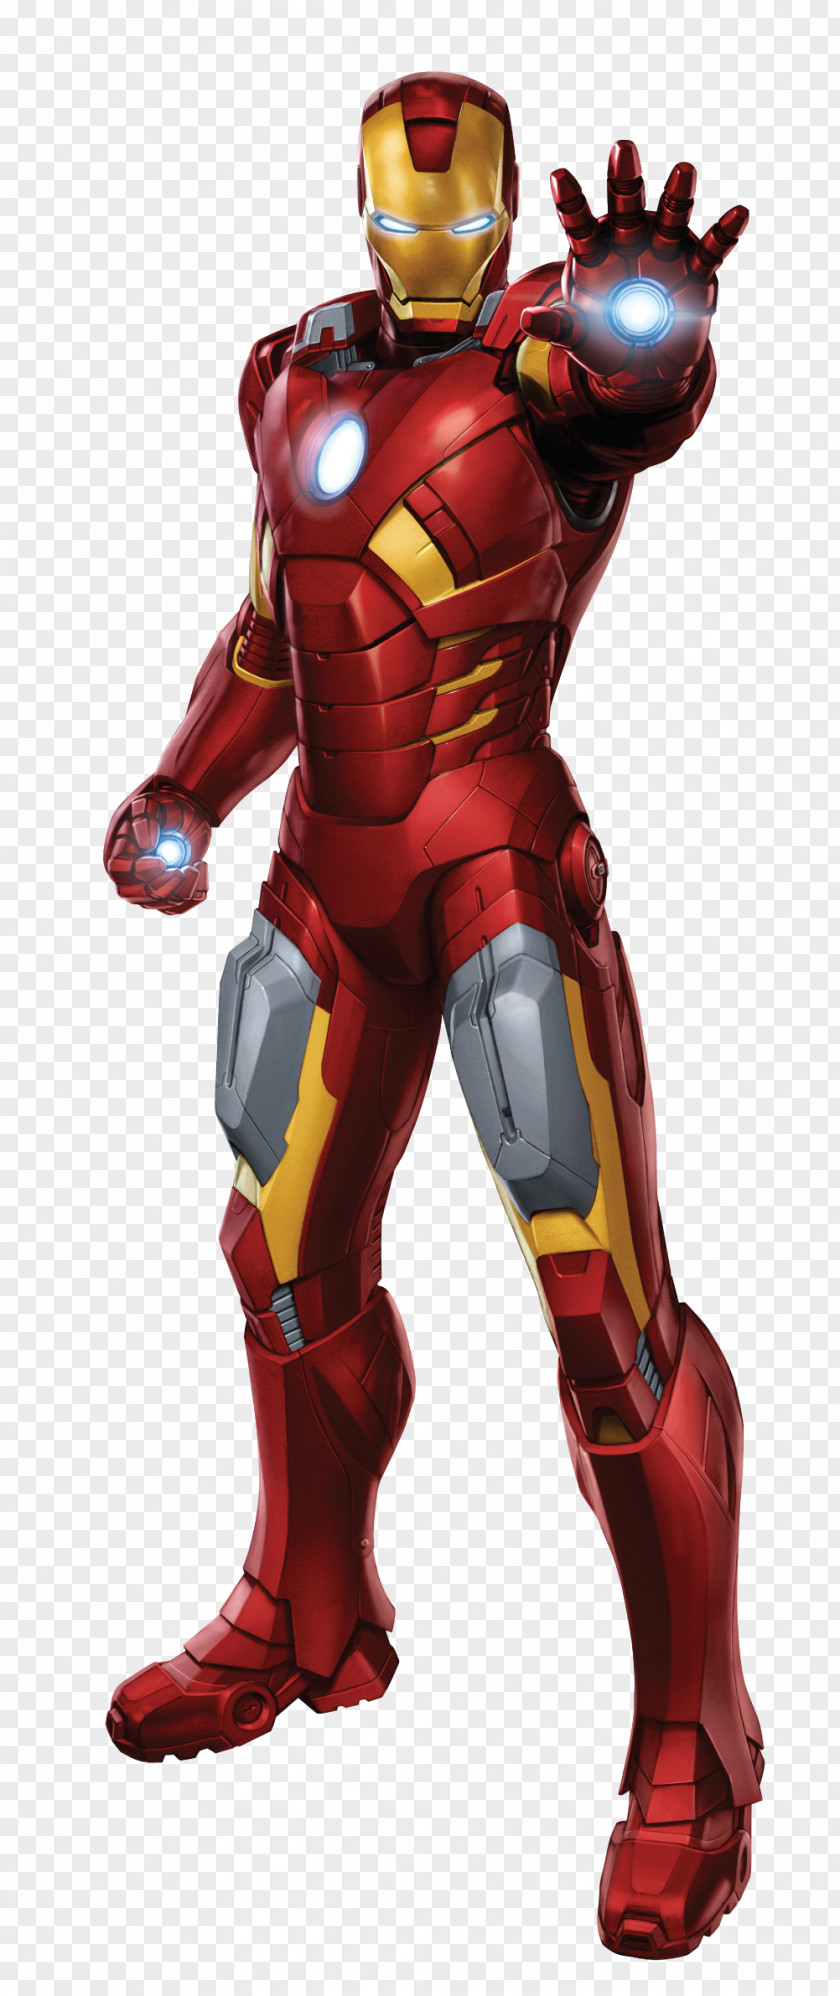 Ironman Iron Man Clint Barton Captain America Marvel Cinematic Universe Film PNG